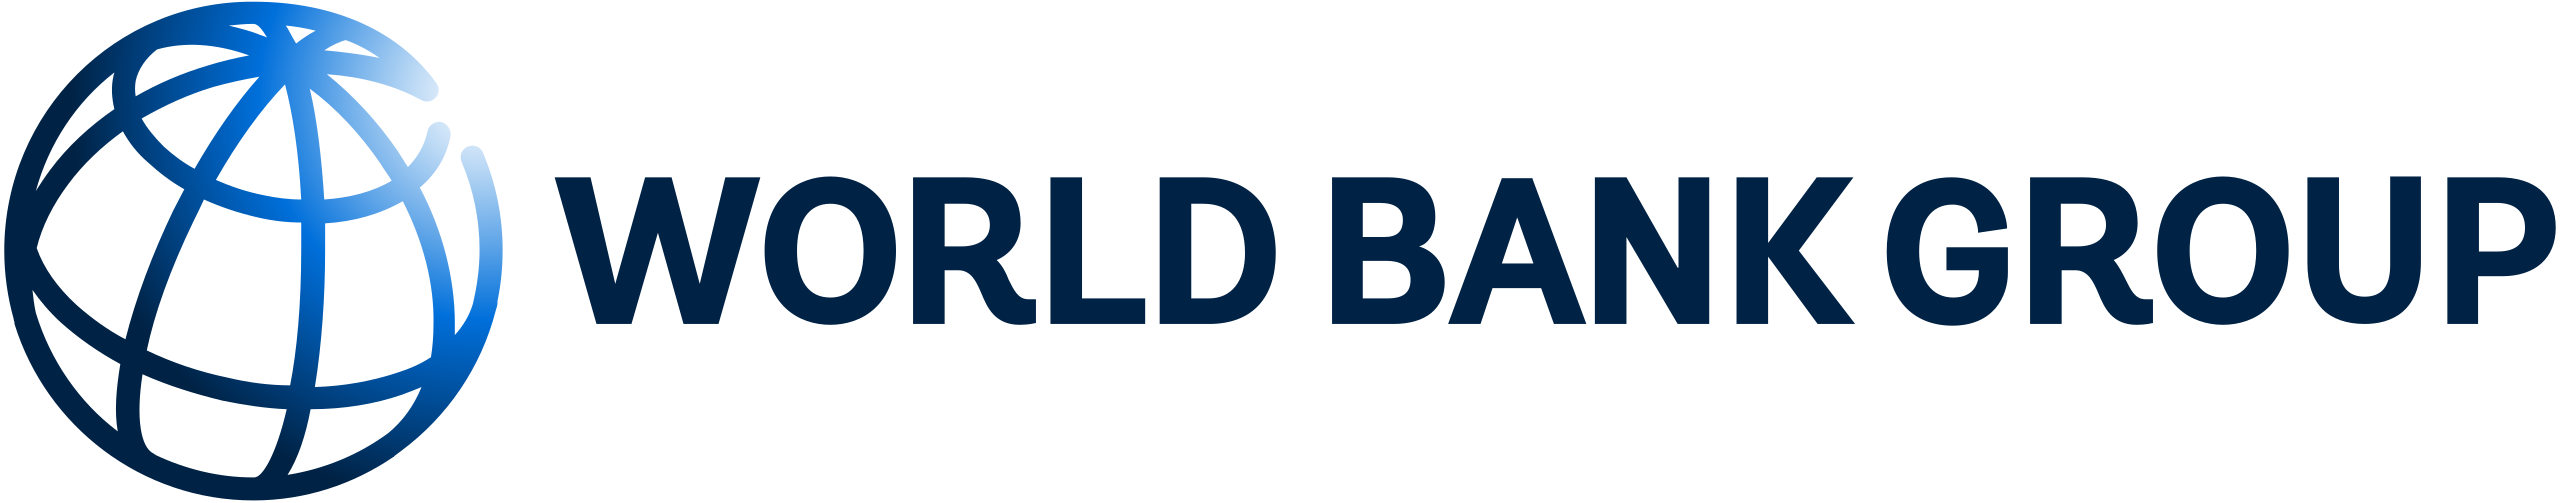 world bank groups